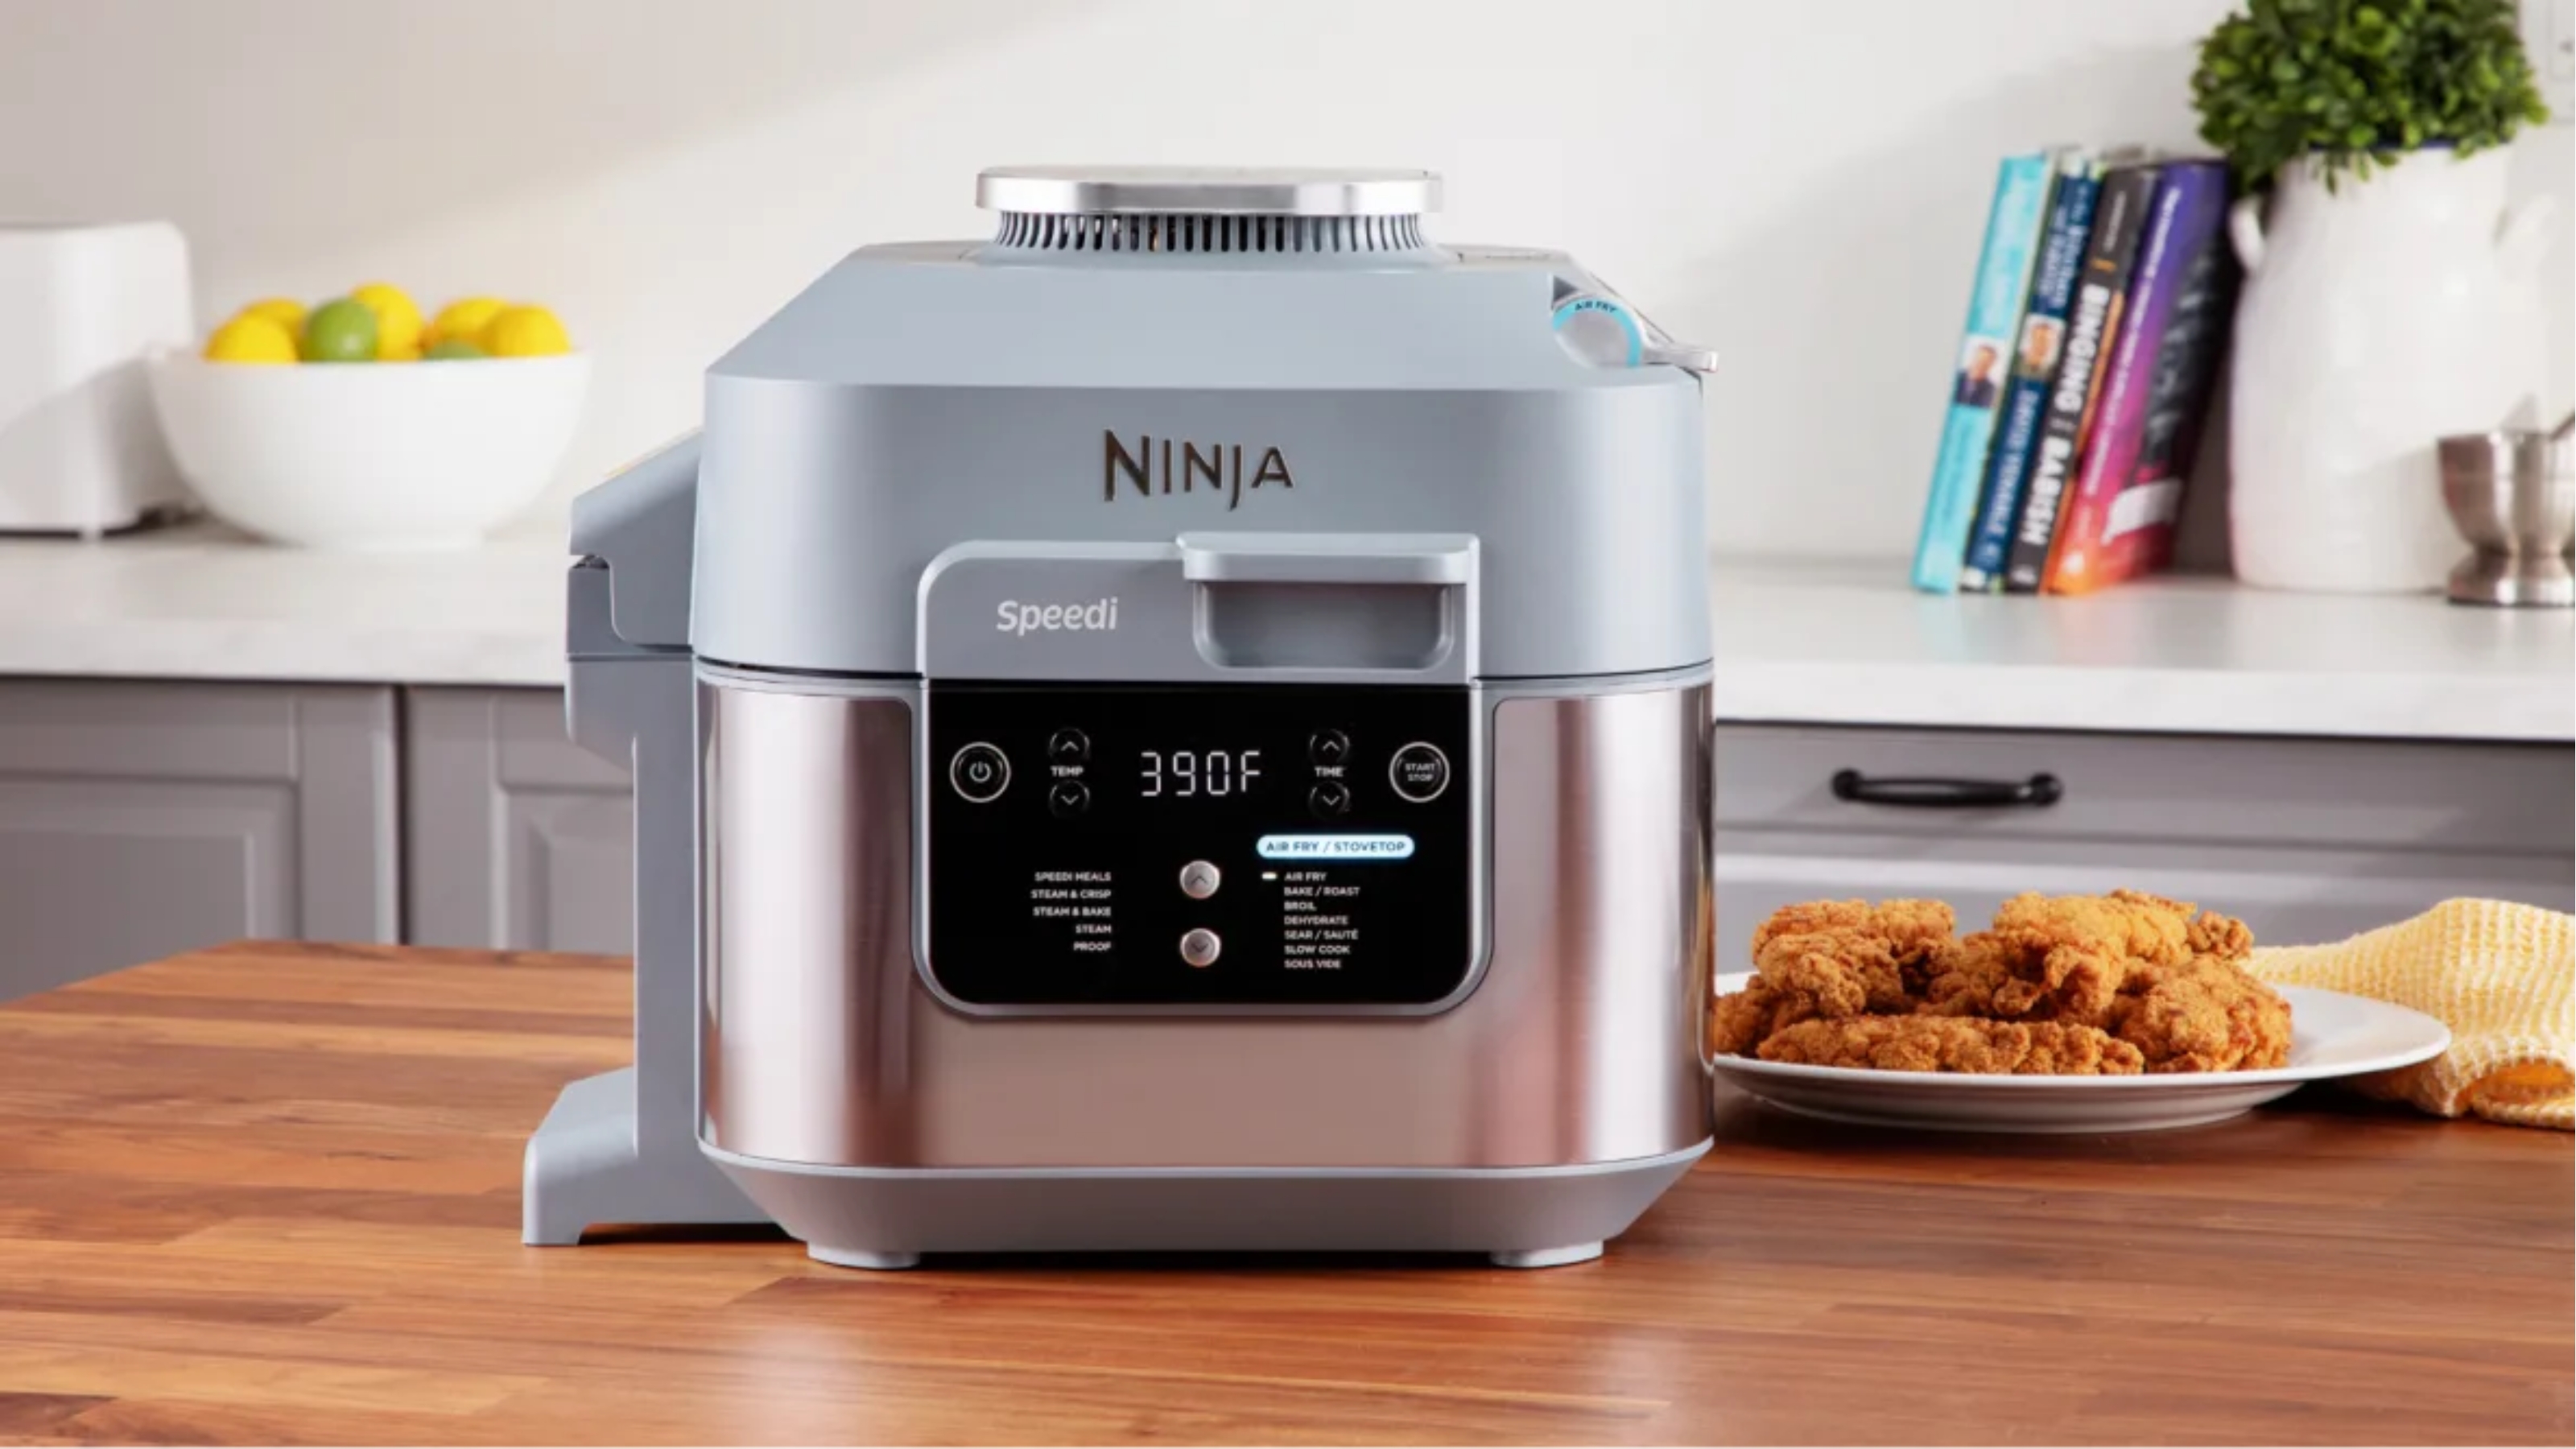 Ninja Foodi Dual Zone Air Fryer Unboxing & Set Up Fast 